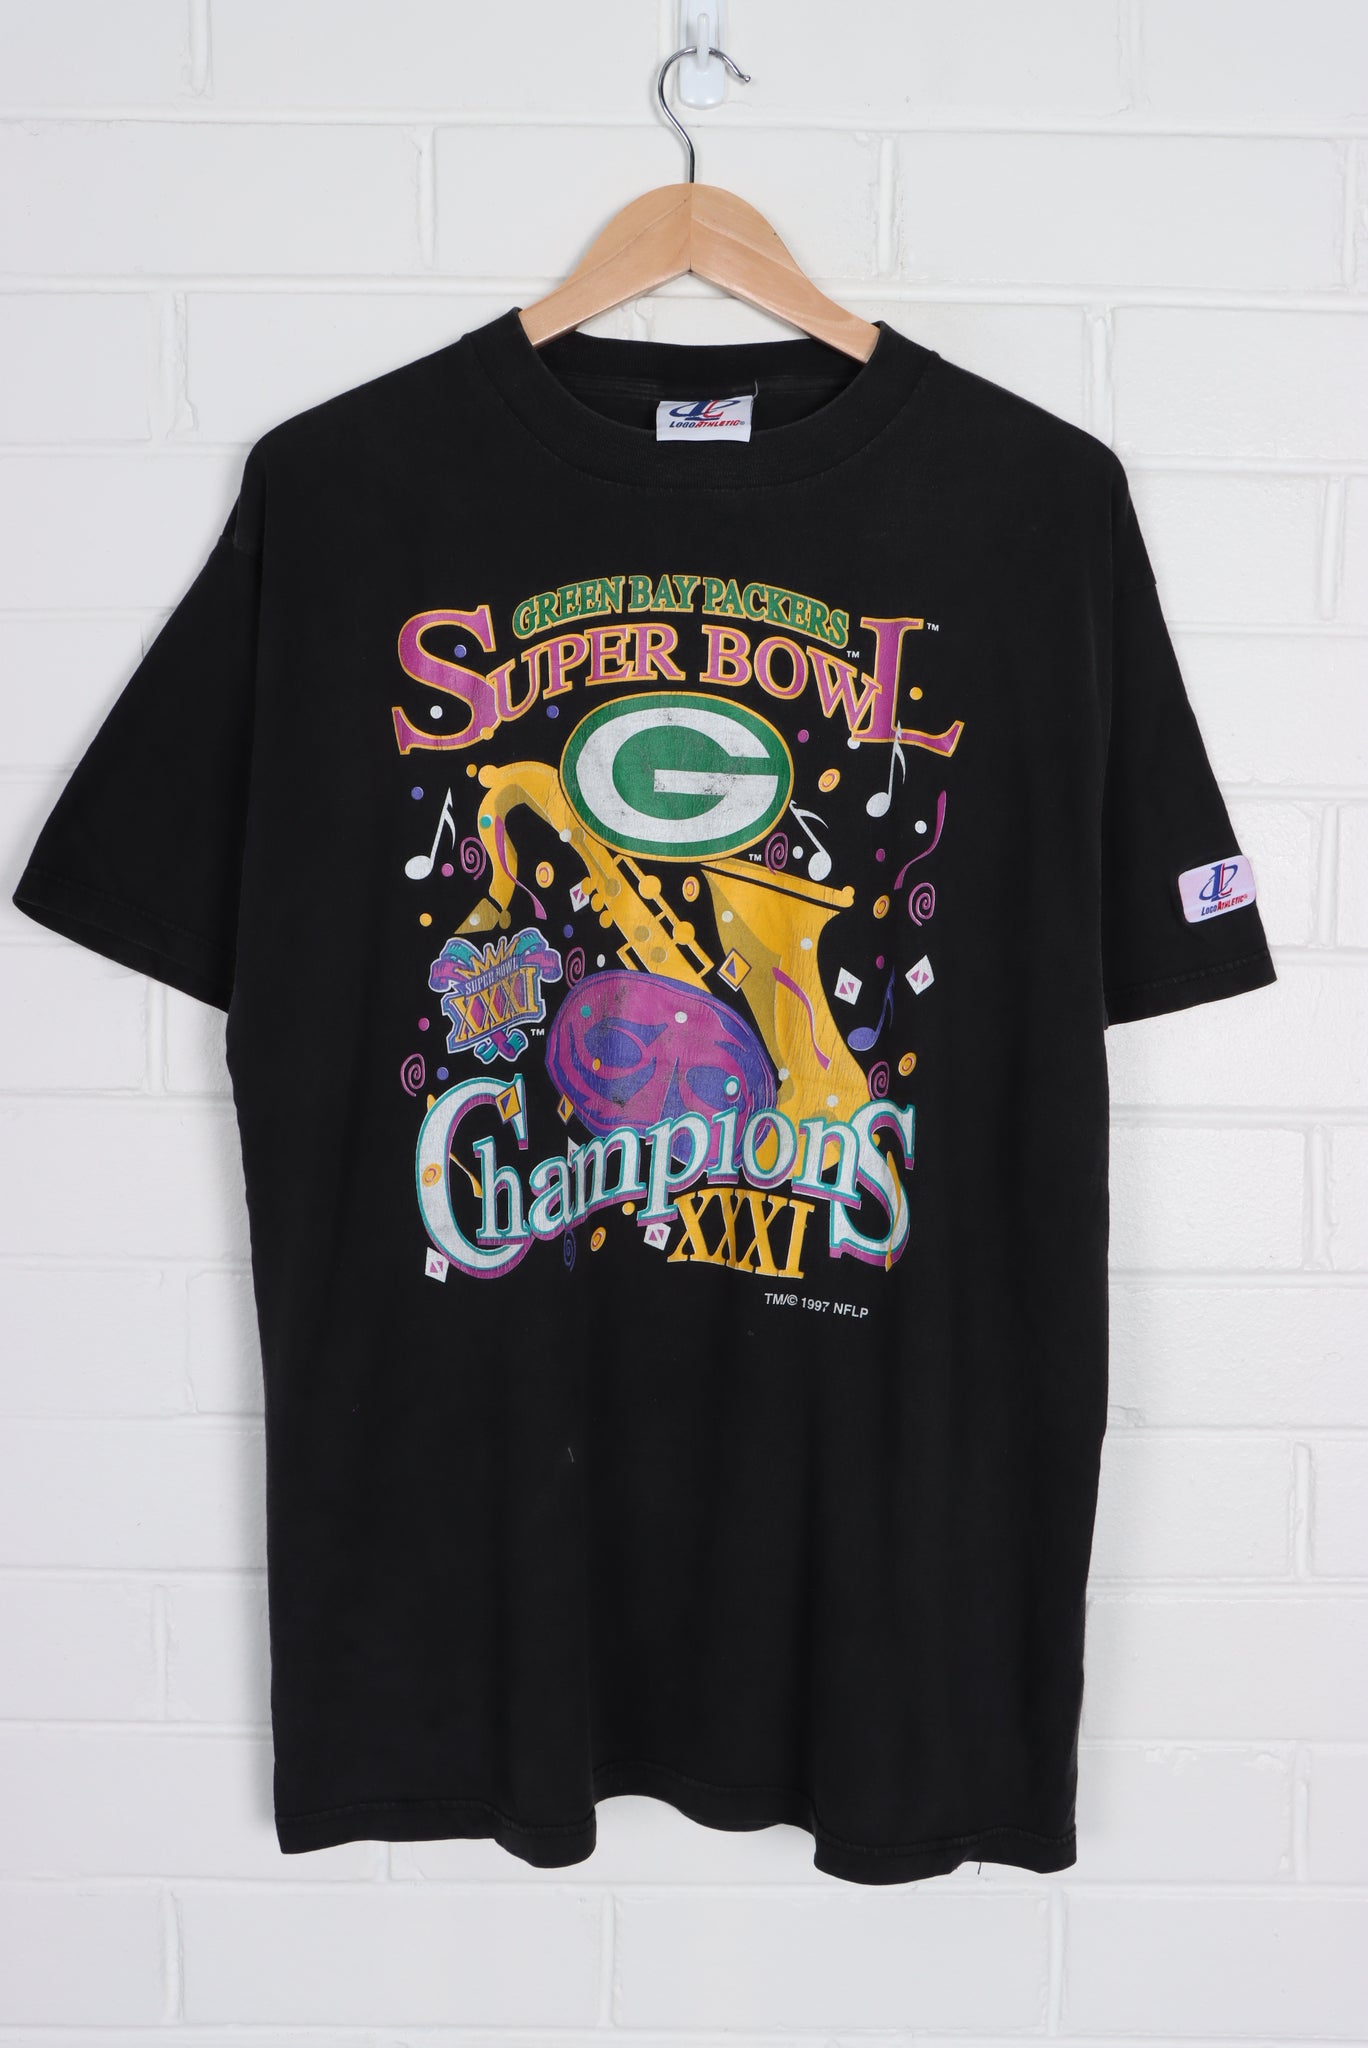 Super Bowl Champions Green Bay Packers 1997 T-Shirt (L)